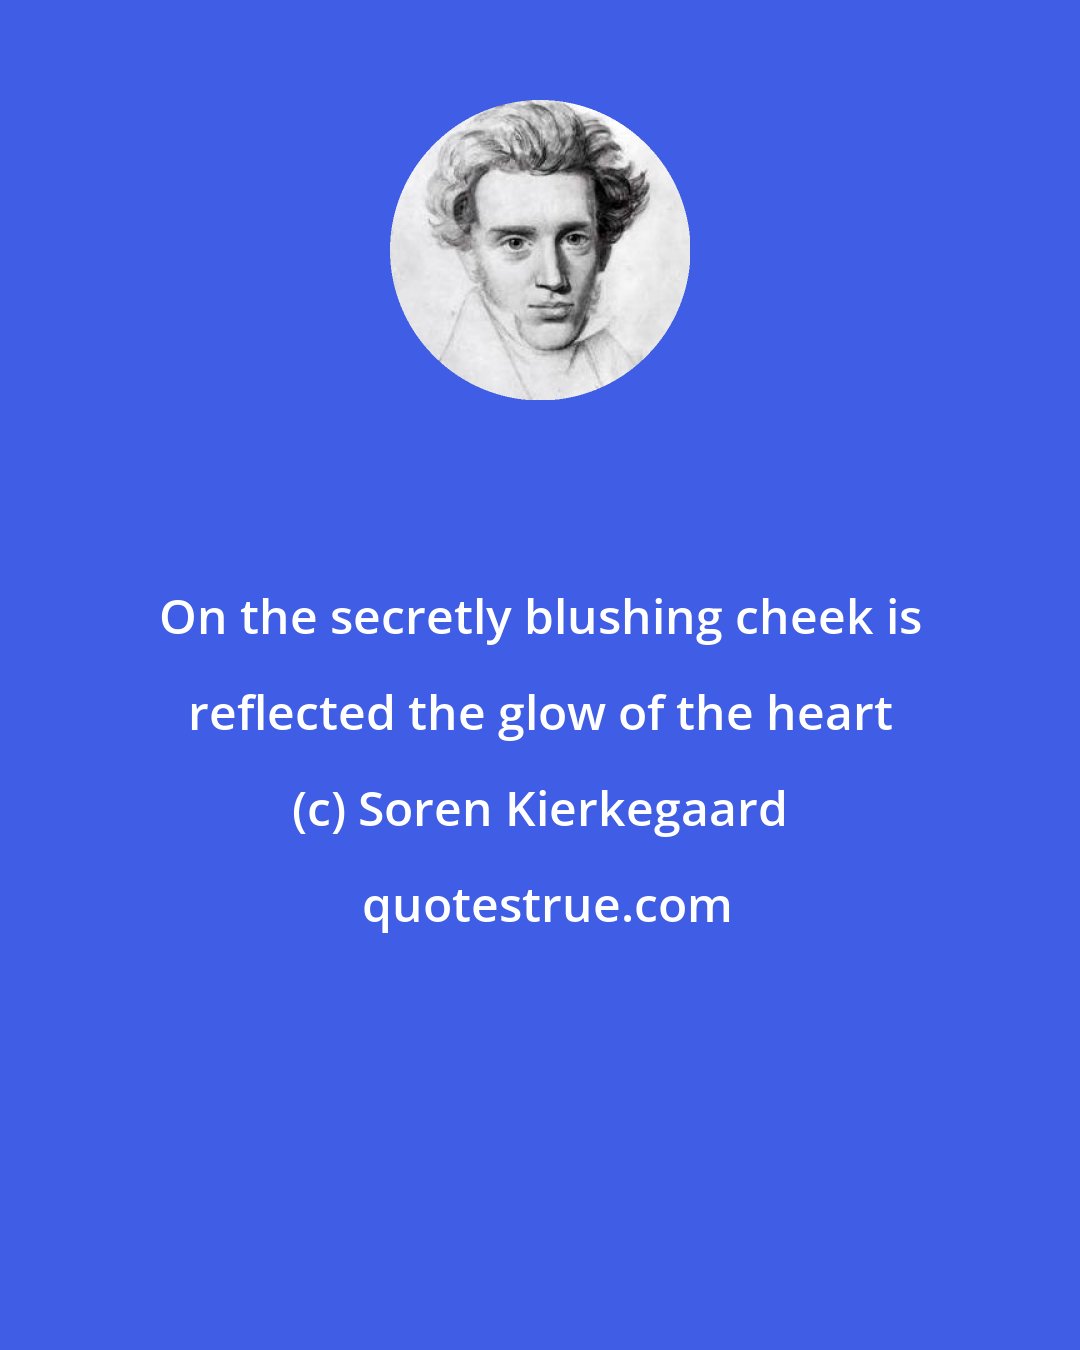 Soren Kierkegaard: On the secretly blushing cheek is reflected the glow of the heart